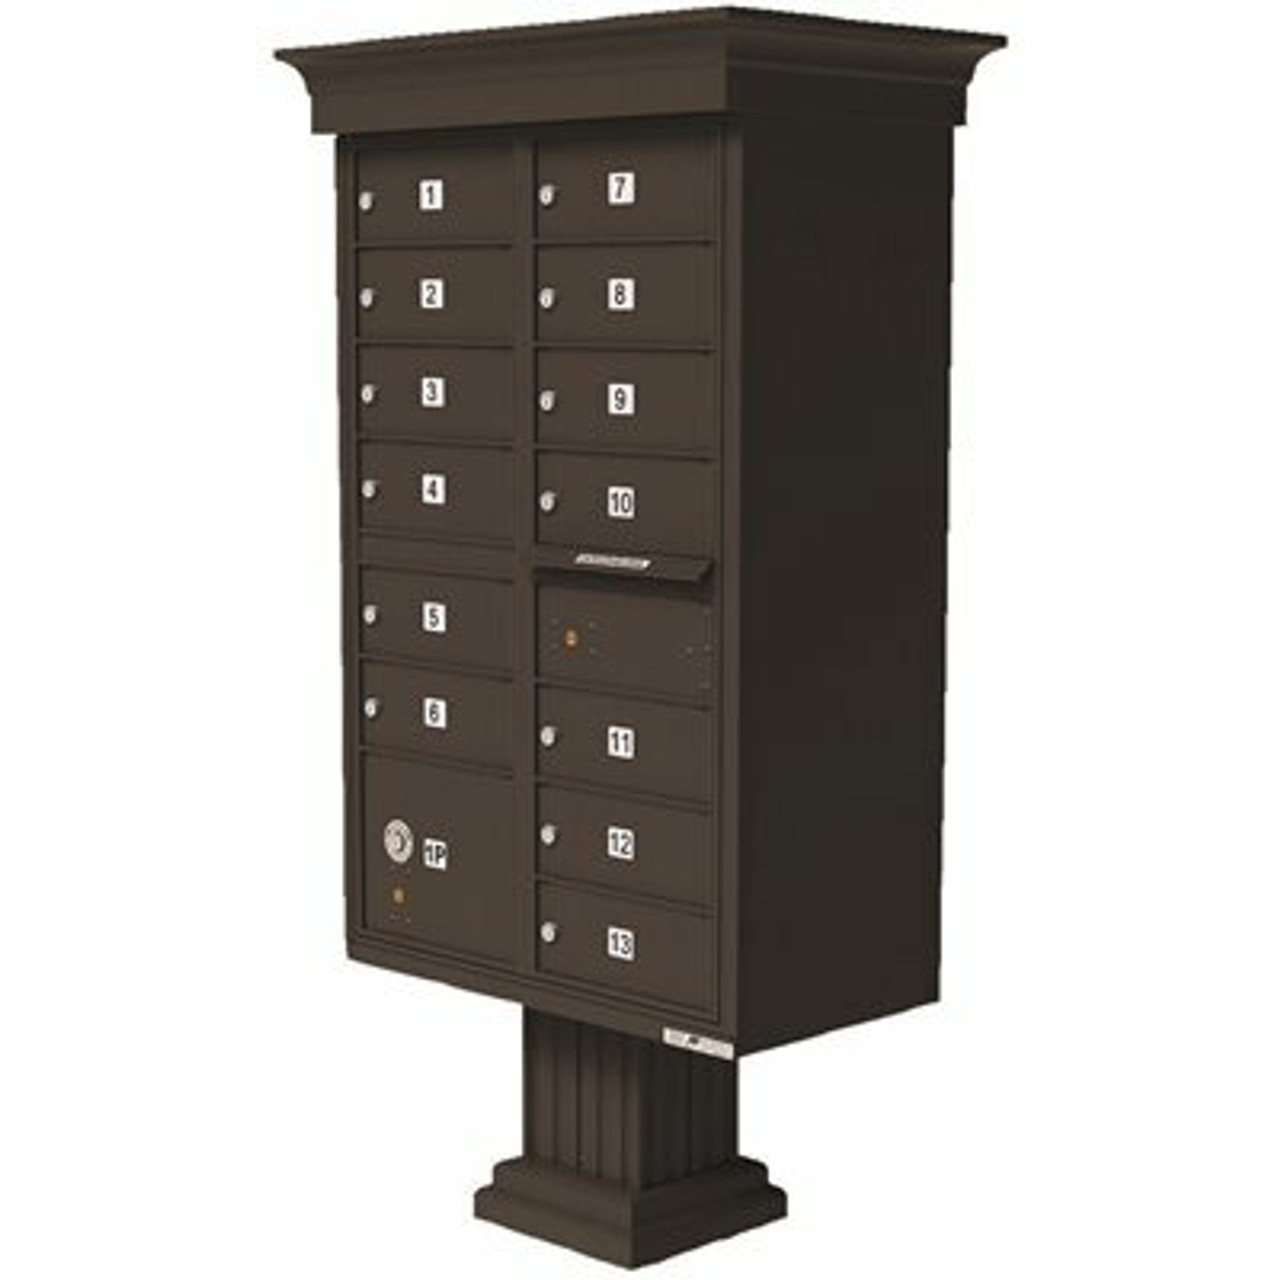 Florence Vital 13-Mailboxes 1-Parcel Locker 1-Outgoing Pedestal Mount Cluster Box Unit - 3552709